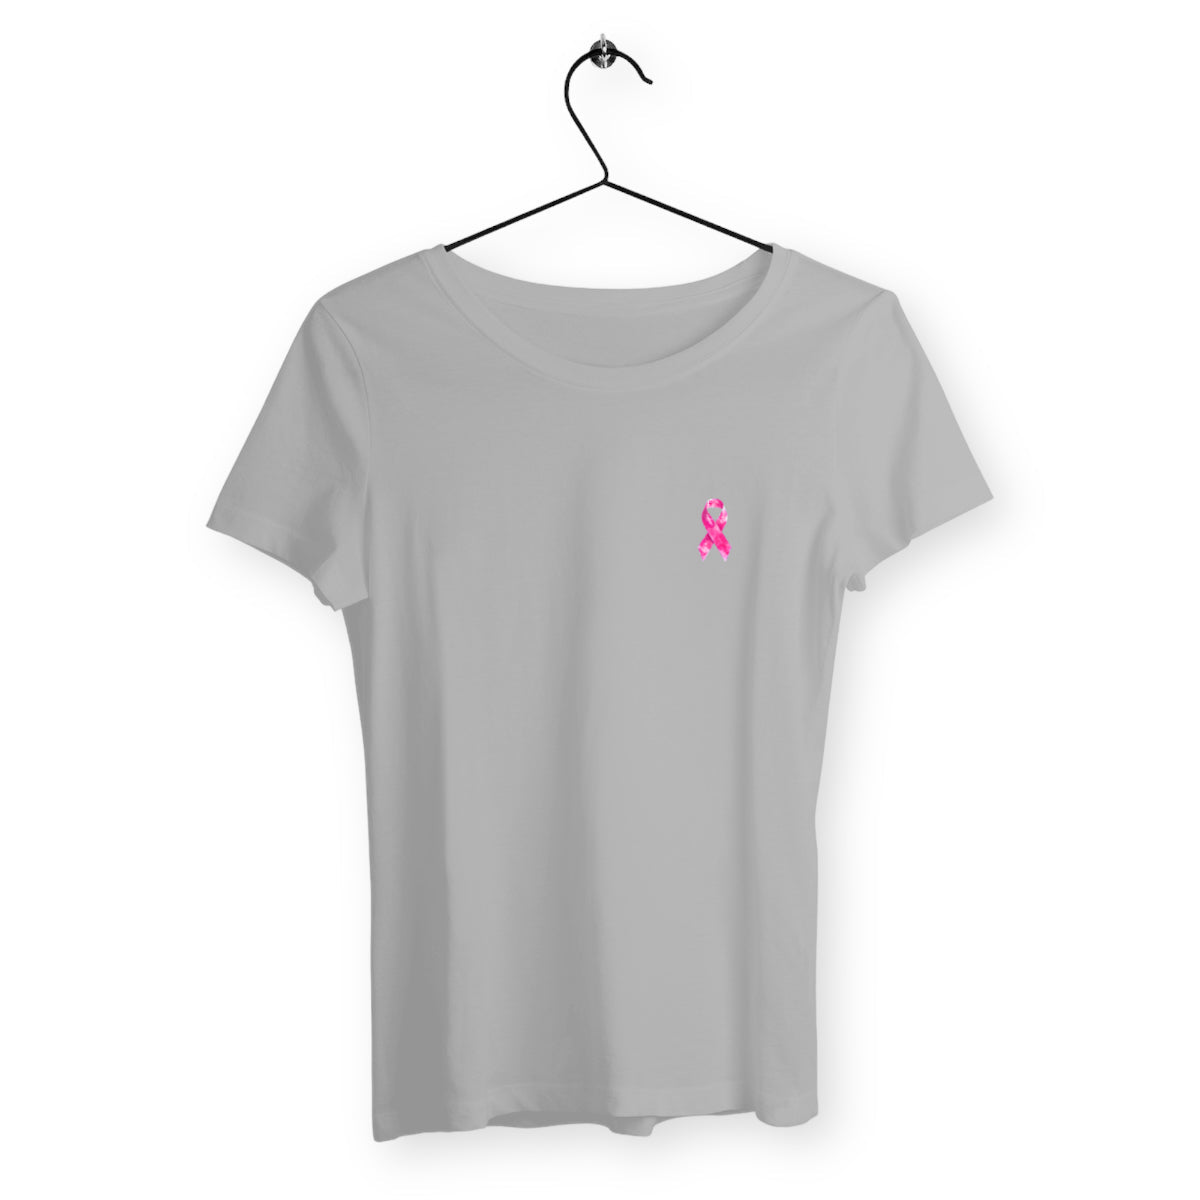 T-shirt octobre rose logo